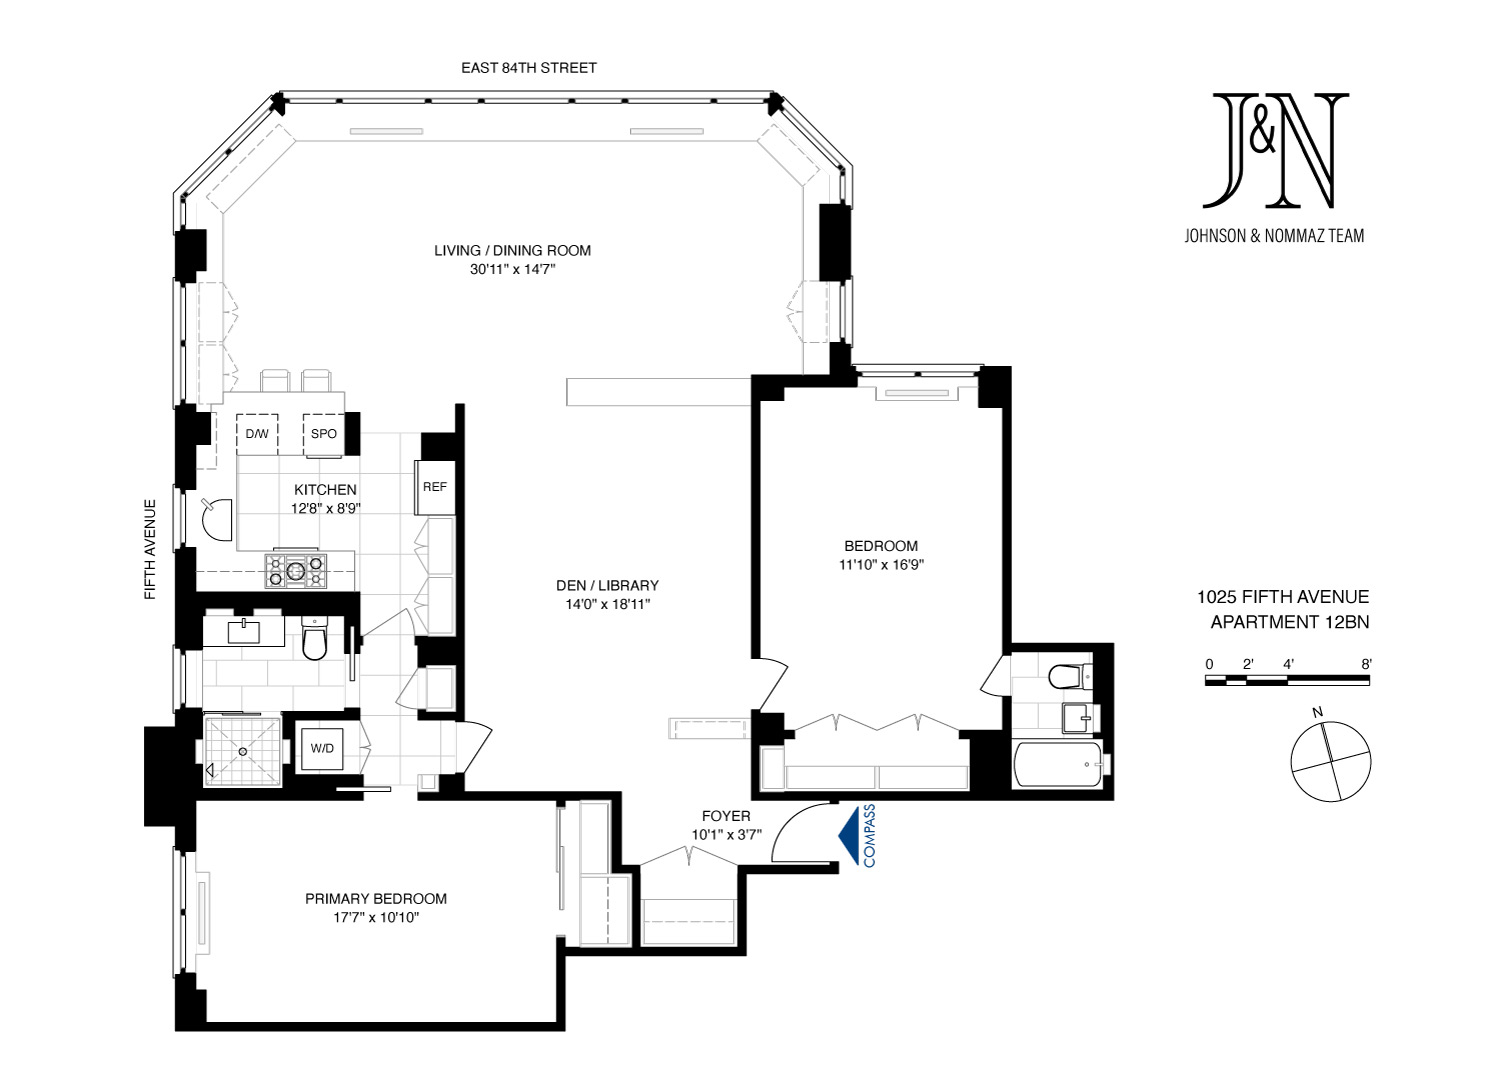 Floorplan for 1025 5th Avenue, 12BN